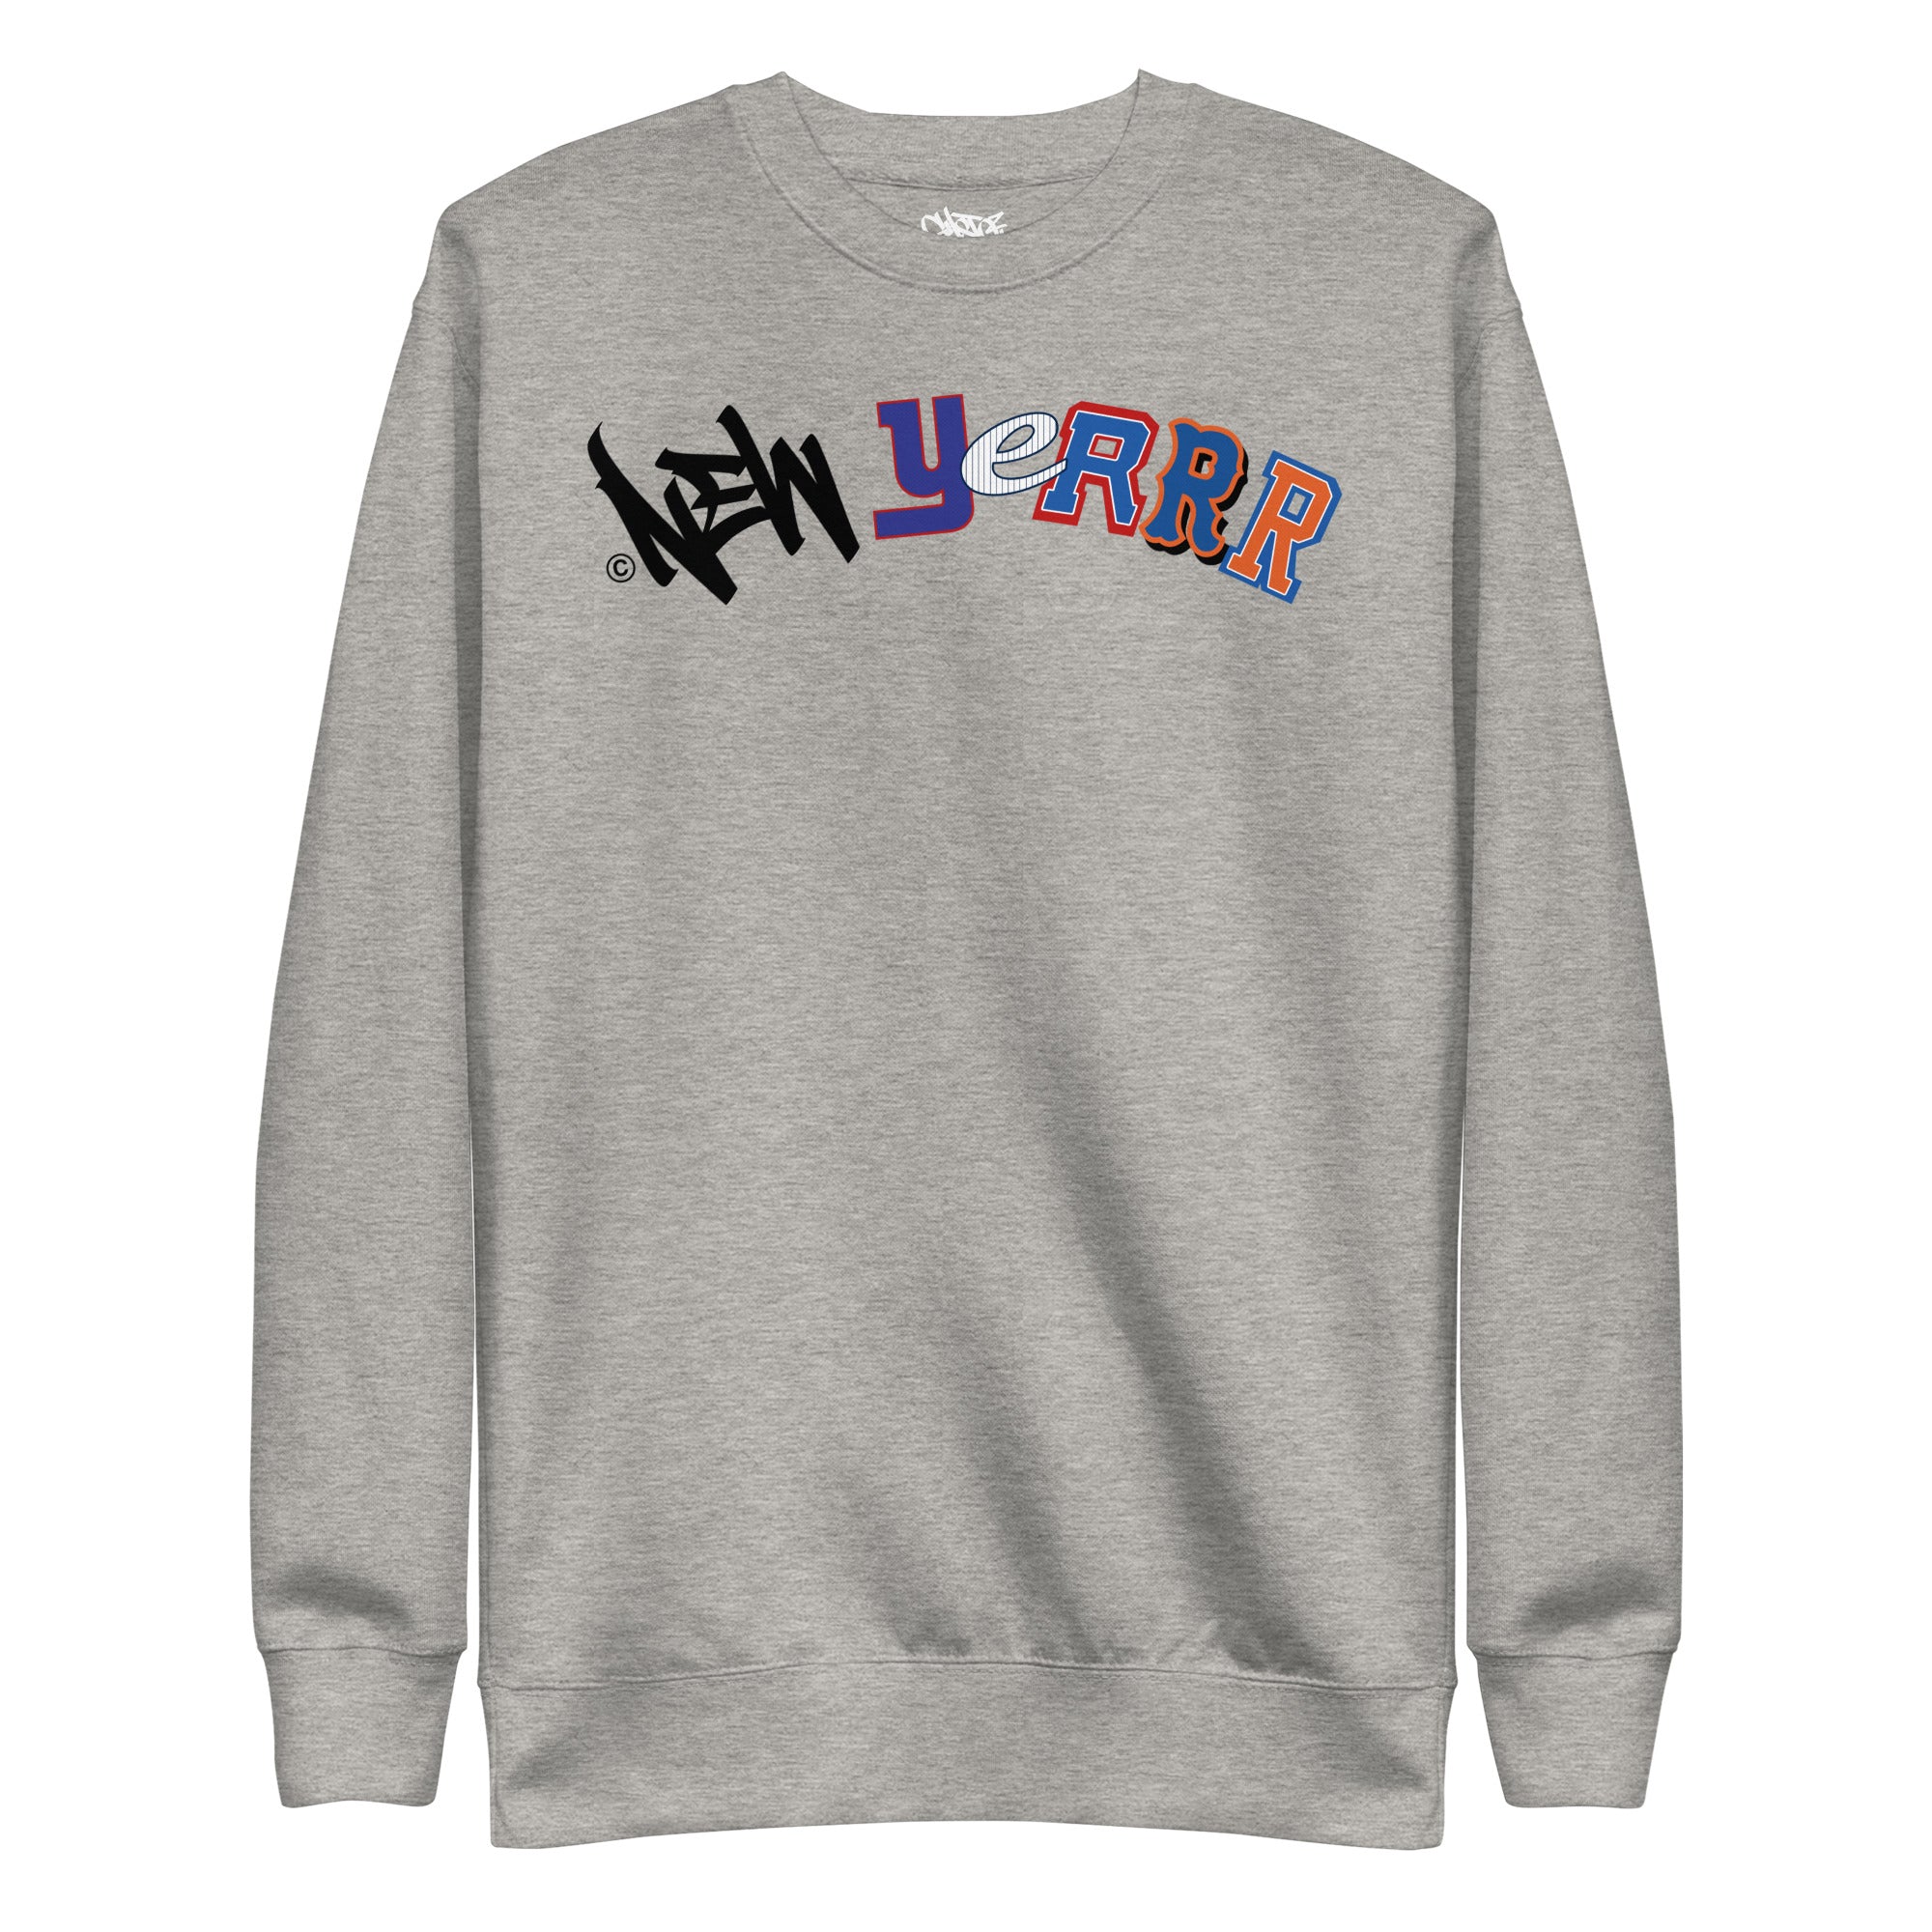 "New Yerrr" Sports Team - Unisex Premium Sweatshirt - GustoNYC